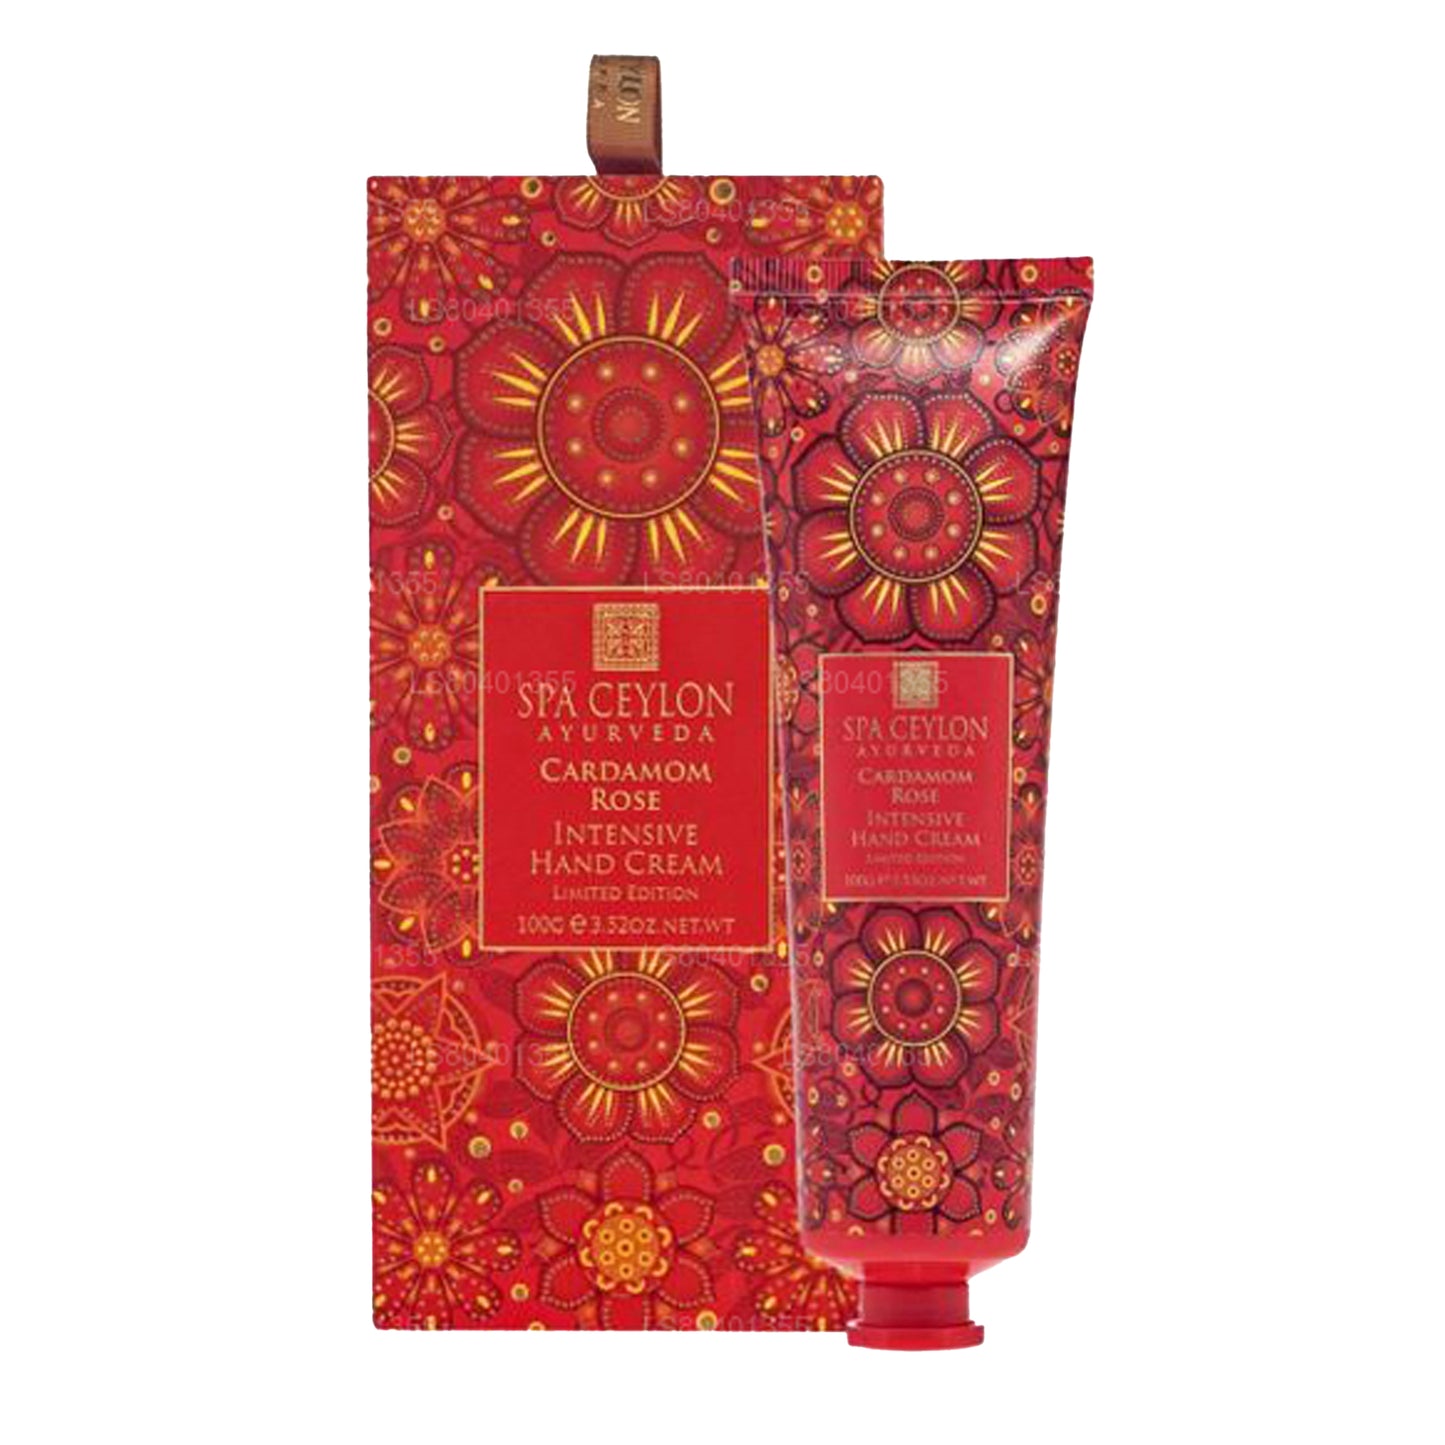 Spa Ceylon Cardamom Rose Intensive Hand Cream (Floral Paradise Limited Edition)